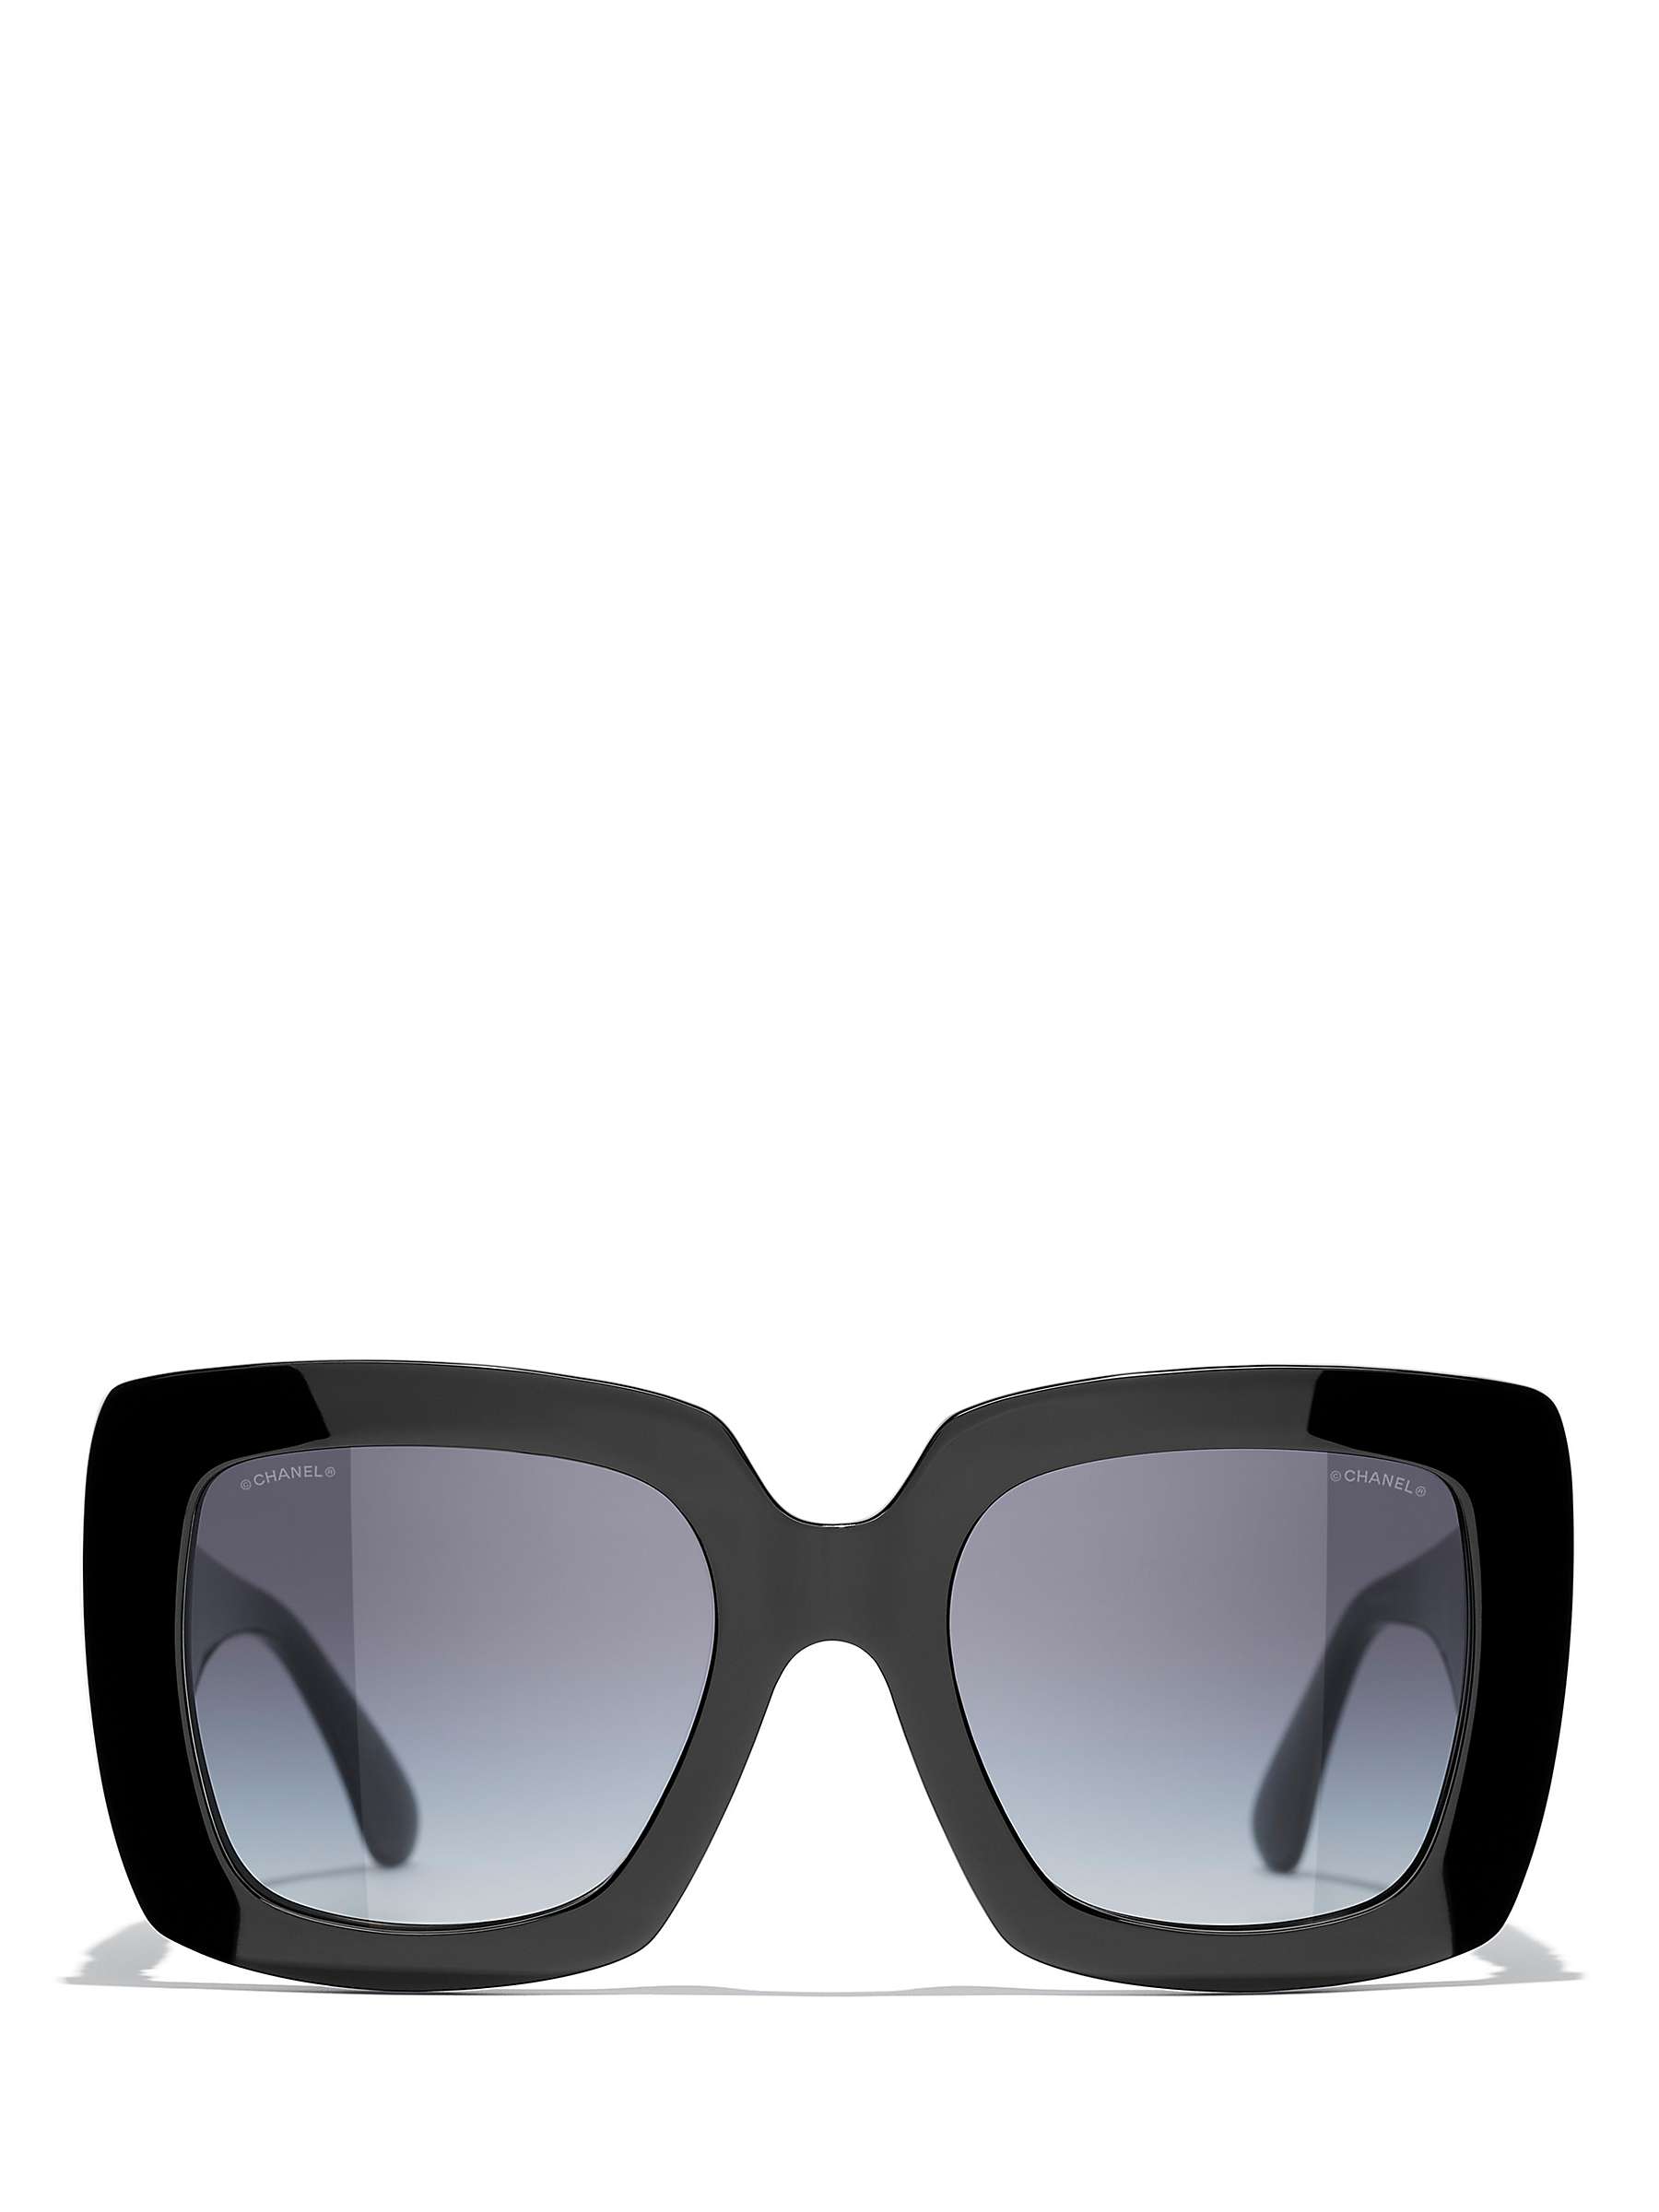 Buy CHANEL Rectangular Sunglasses CH5474Q Black/Grey Gradient Online at johnlewis.com